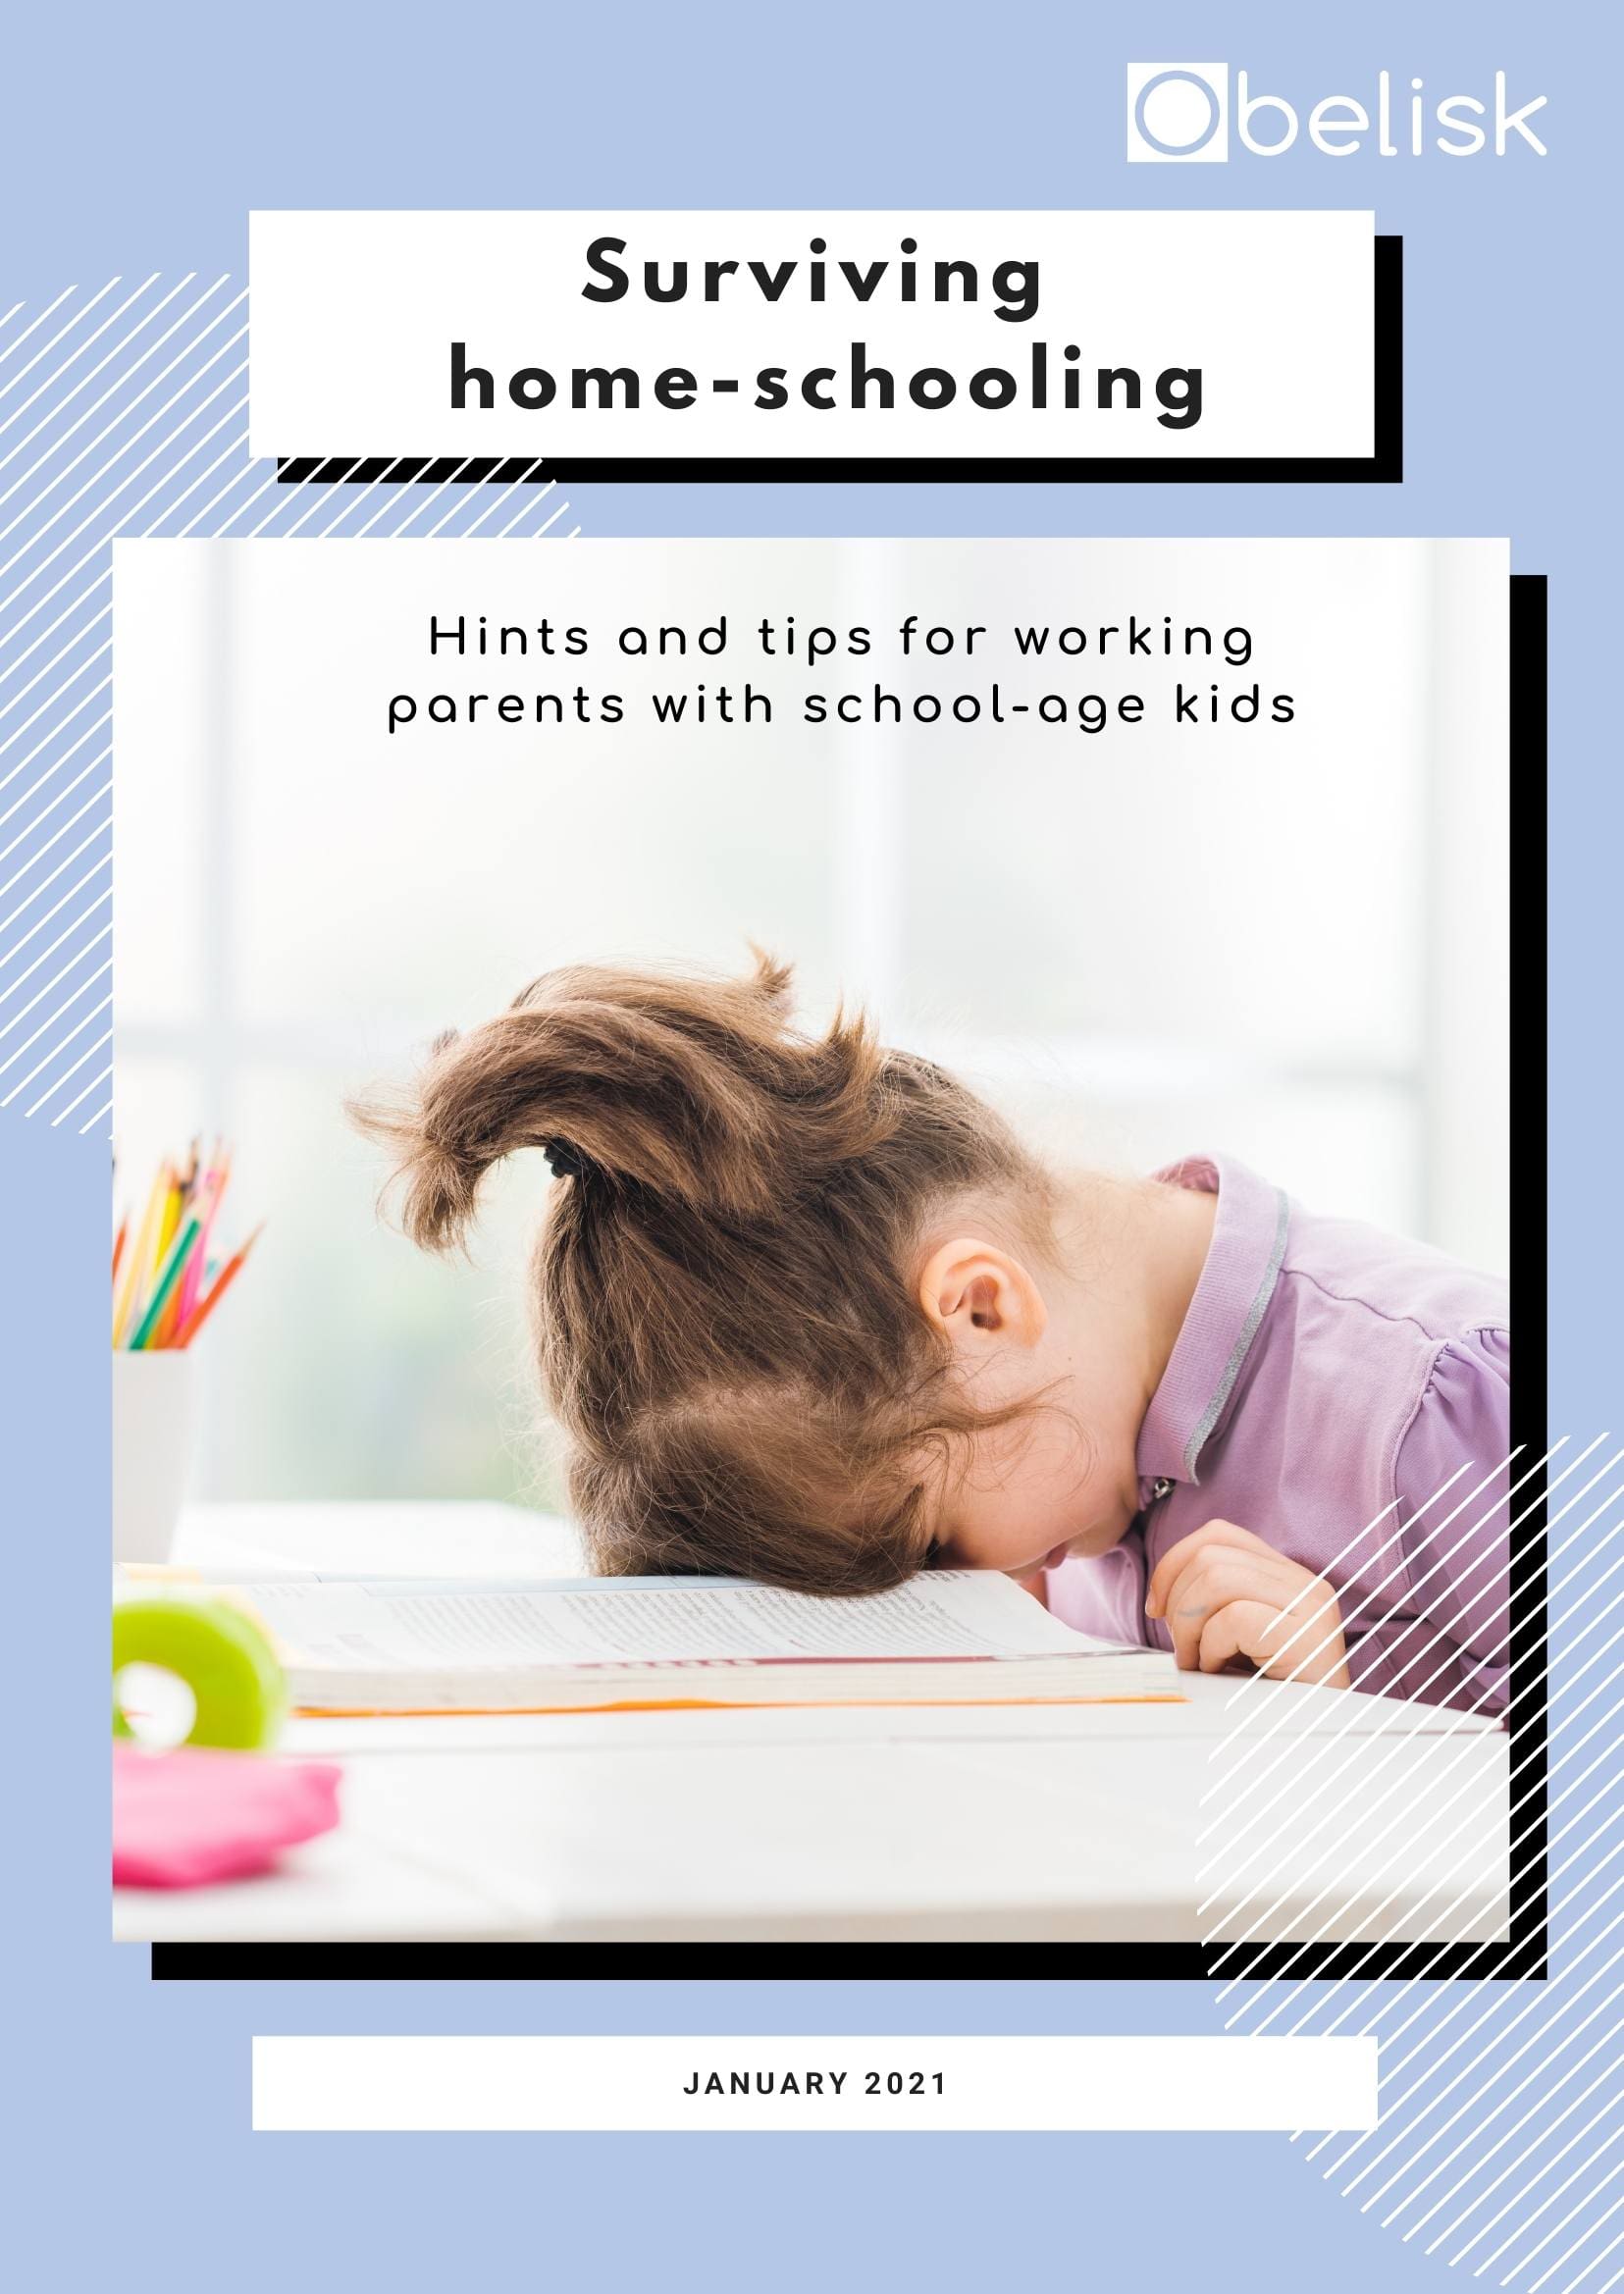 Front cover of Obelisk tips for home-schooling